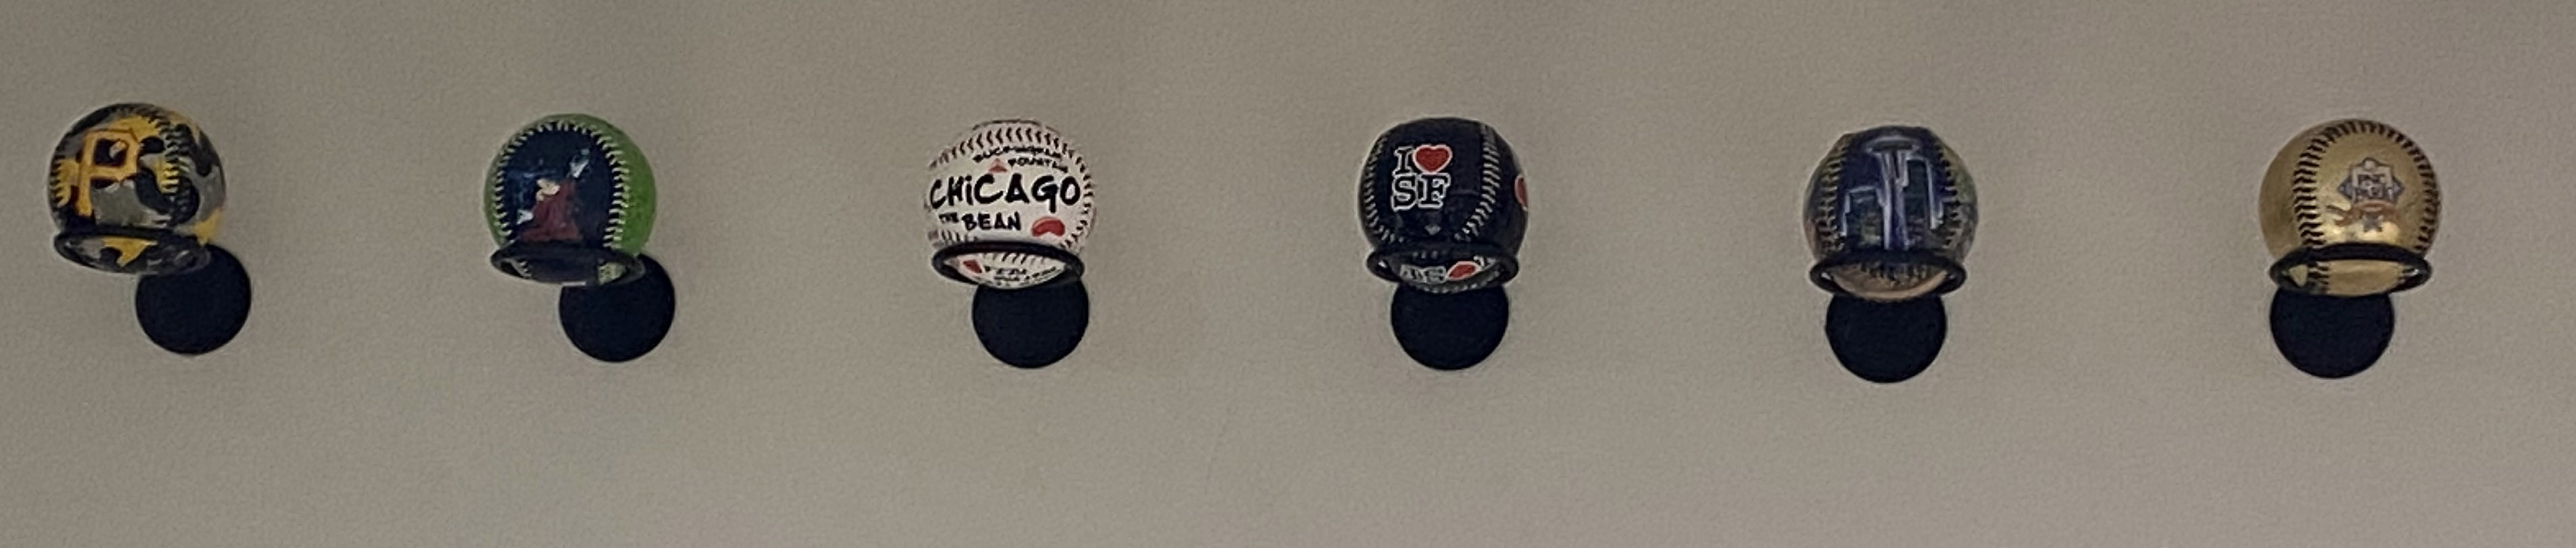 Baseballs displayed on a wall